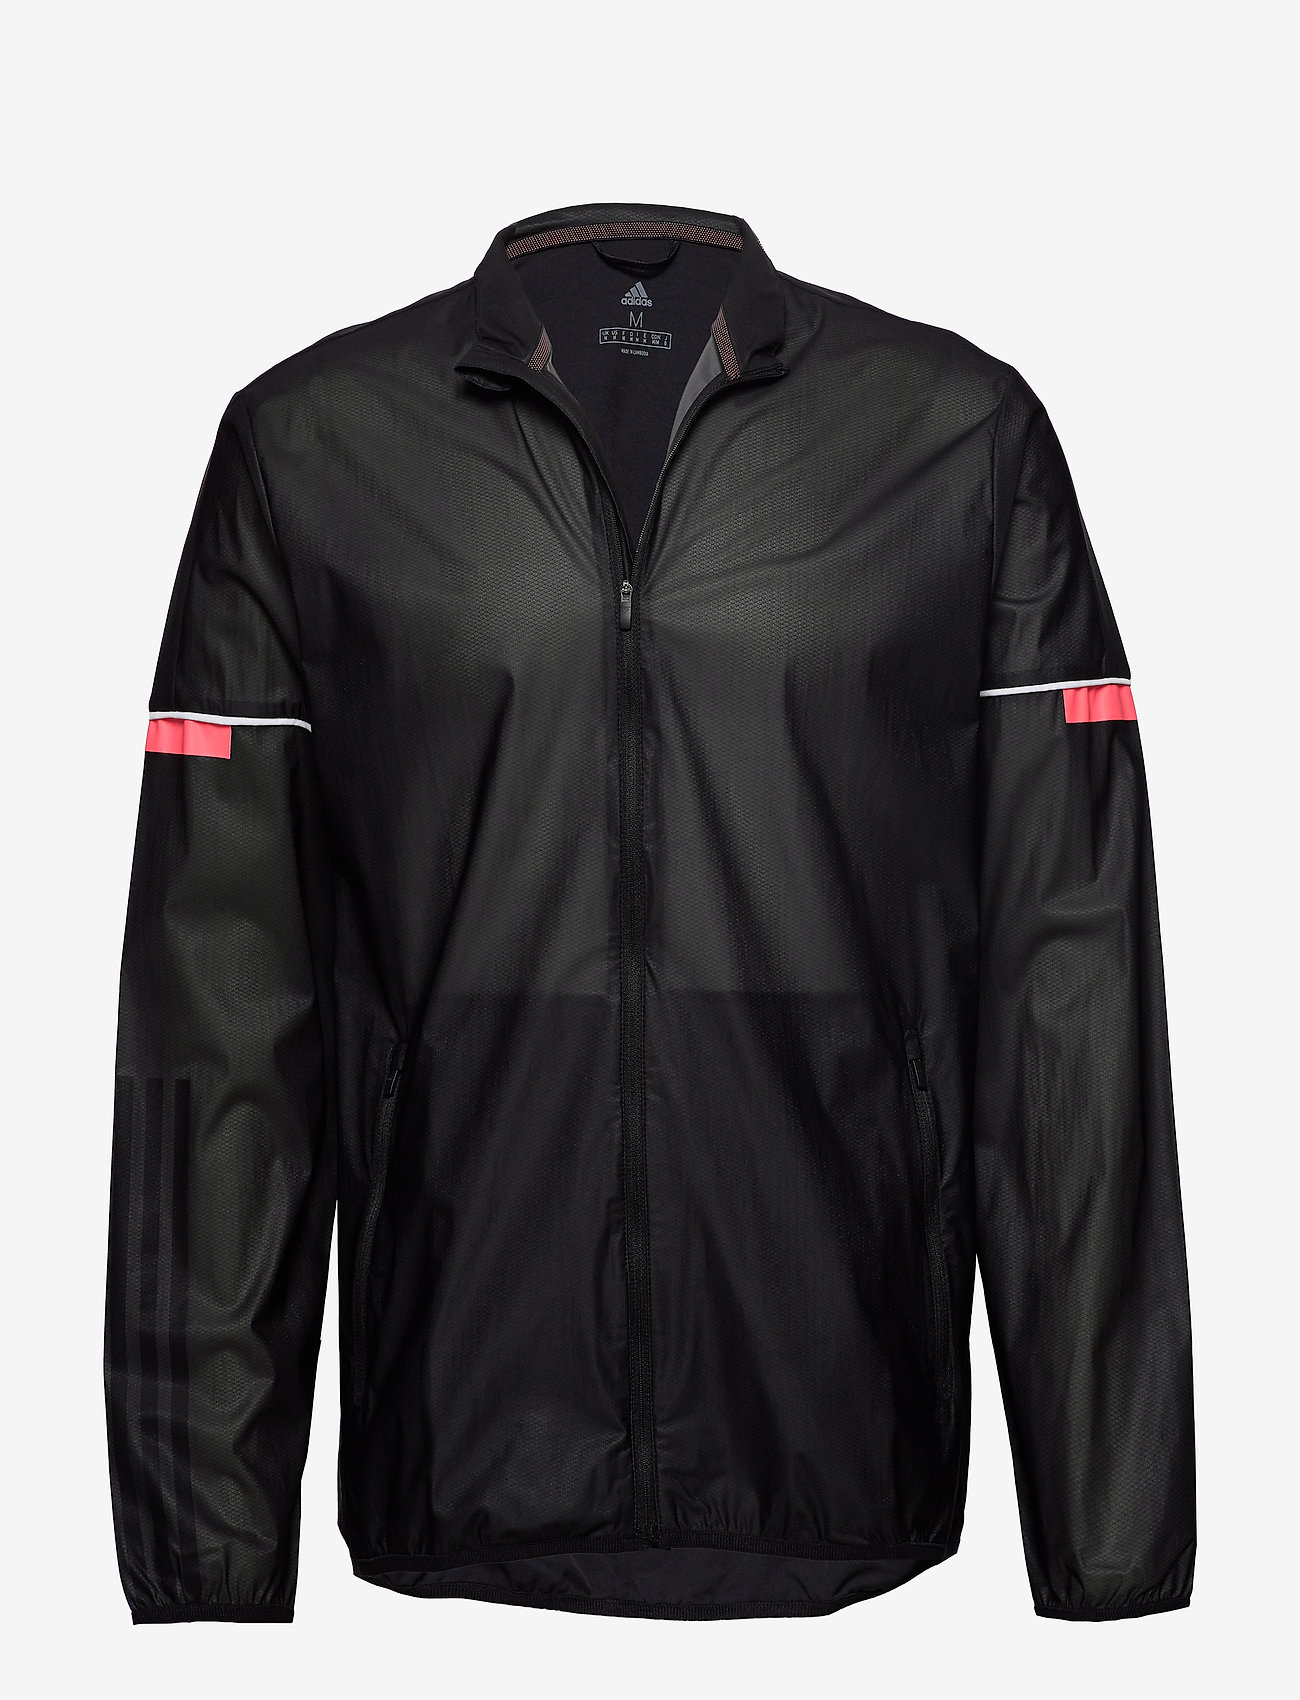 adidas hybrid golf jacket